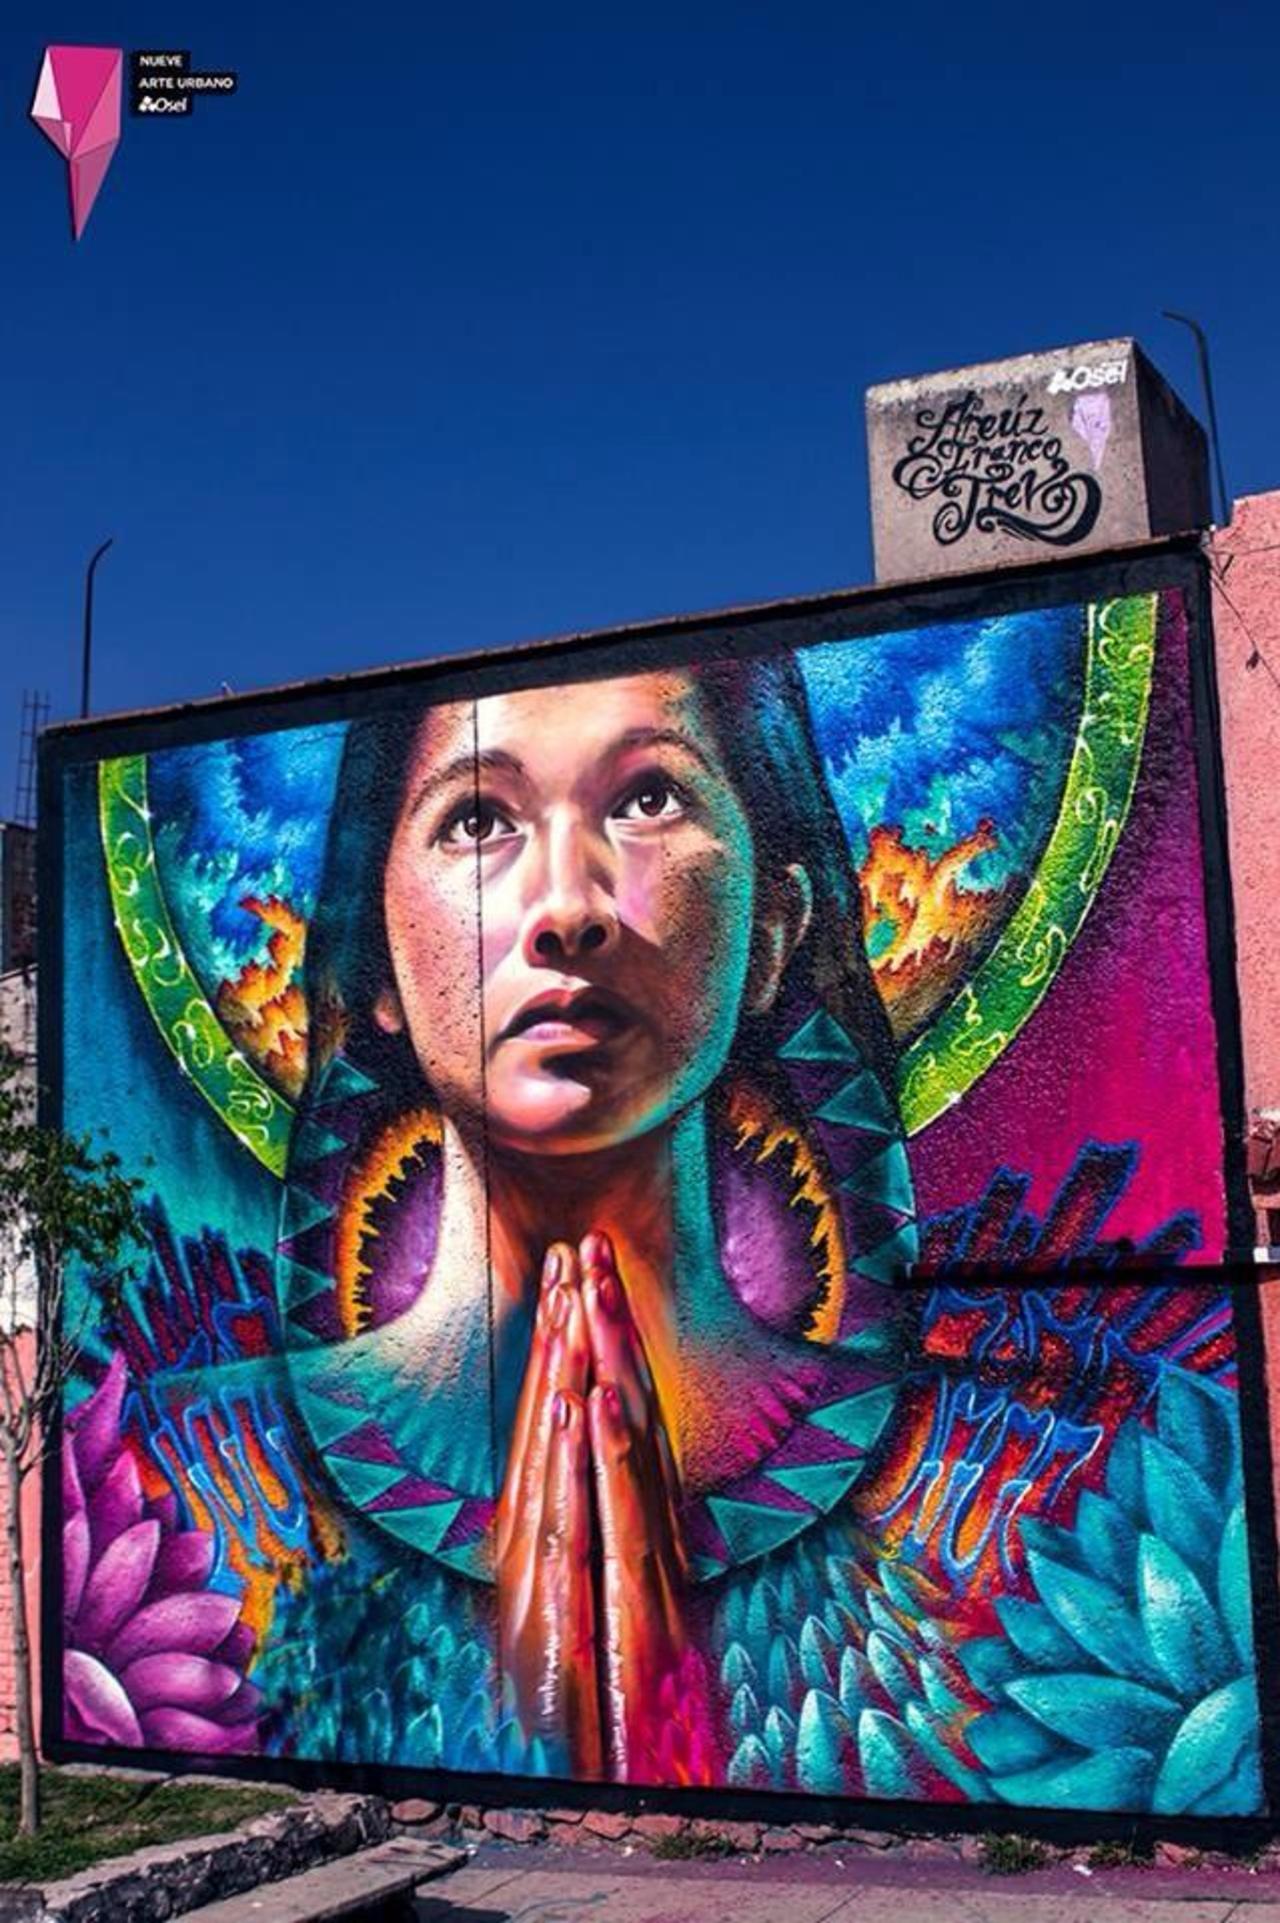 Artist Areúz 77 new Street Art mural in Queretaro, Mexico #Art #graffiti #mural #streetart http://t.co/ShrWX6sVVK